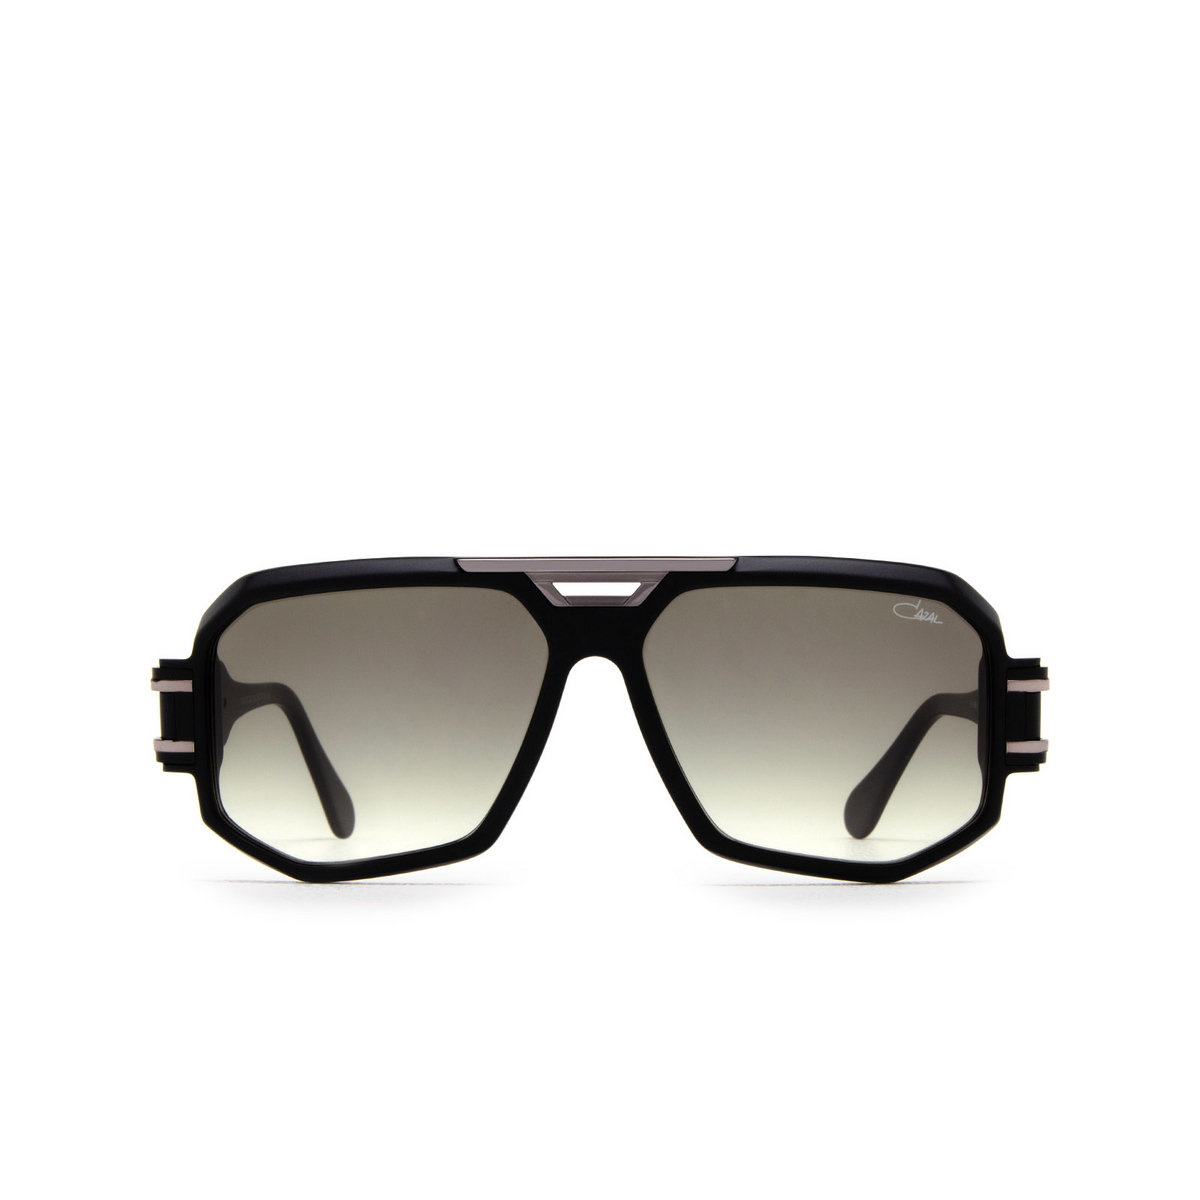 Cazal 675 Sunglasses 002 Black - Gunmetal - front view